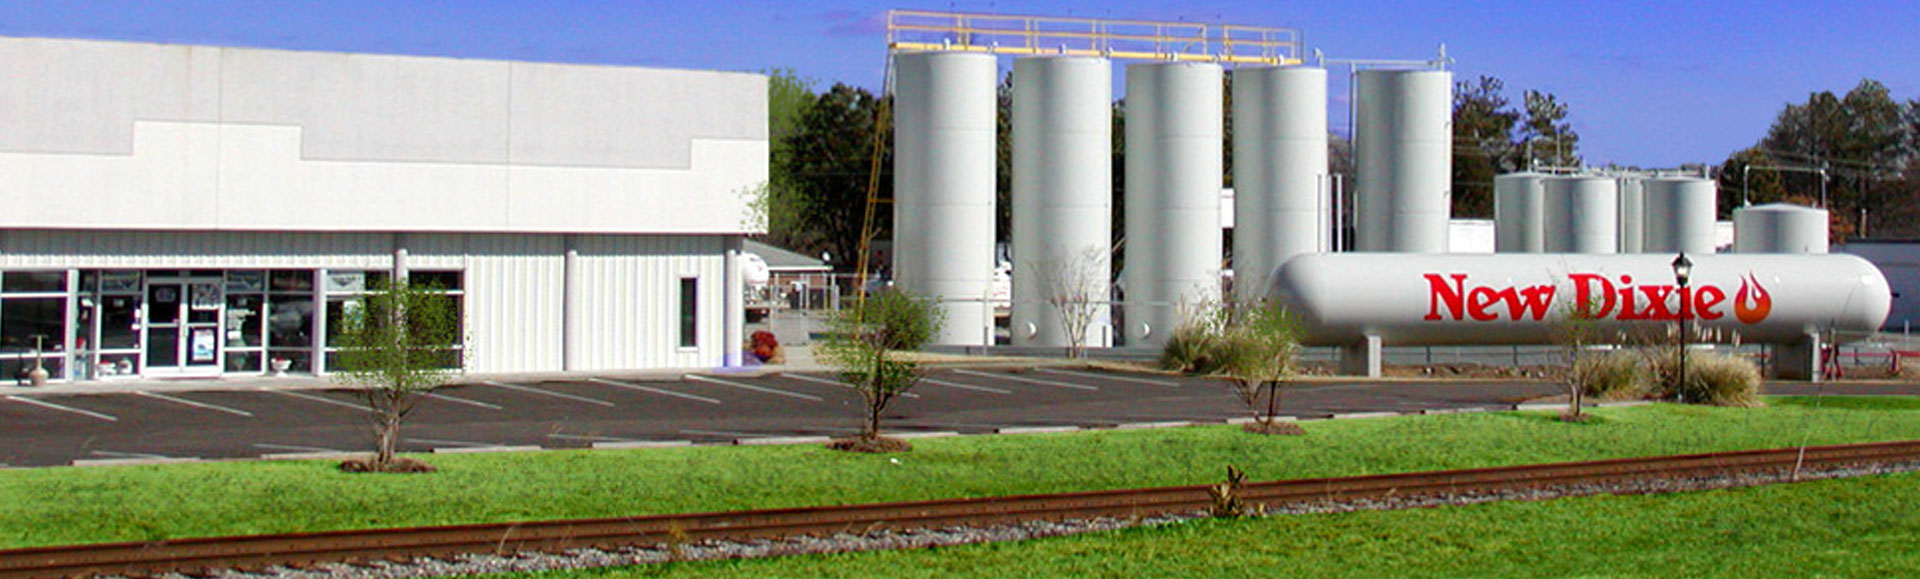 New Dixie Oil Corporation, Roanoke Rapids NC